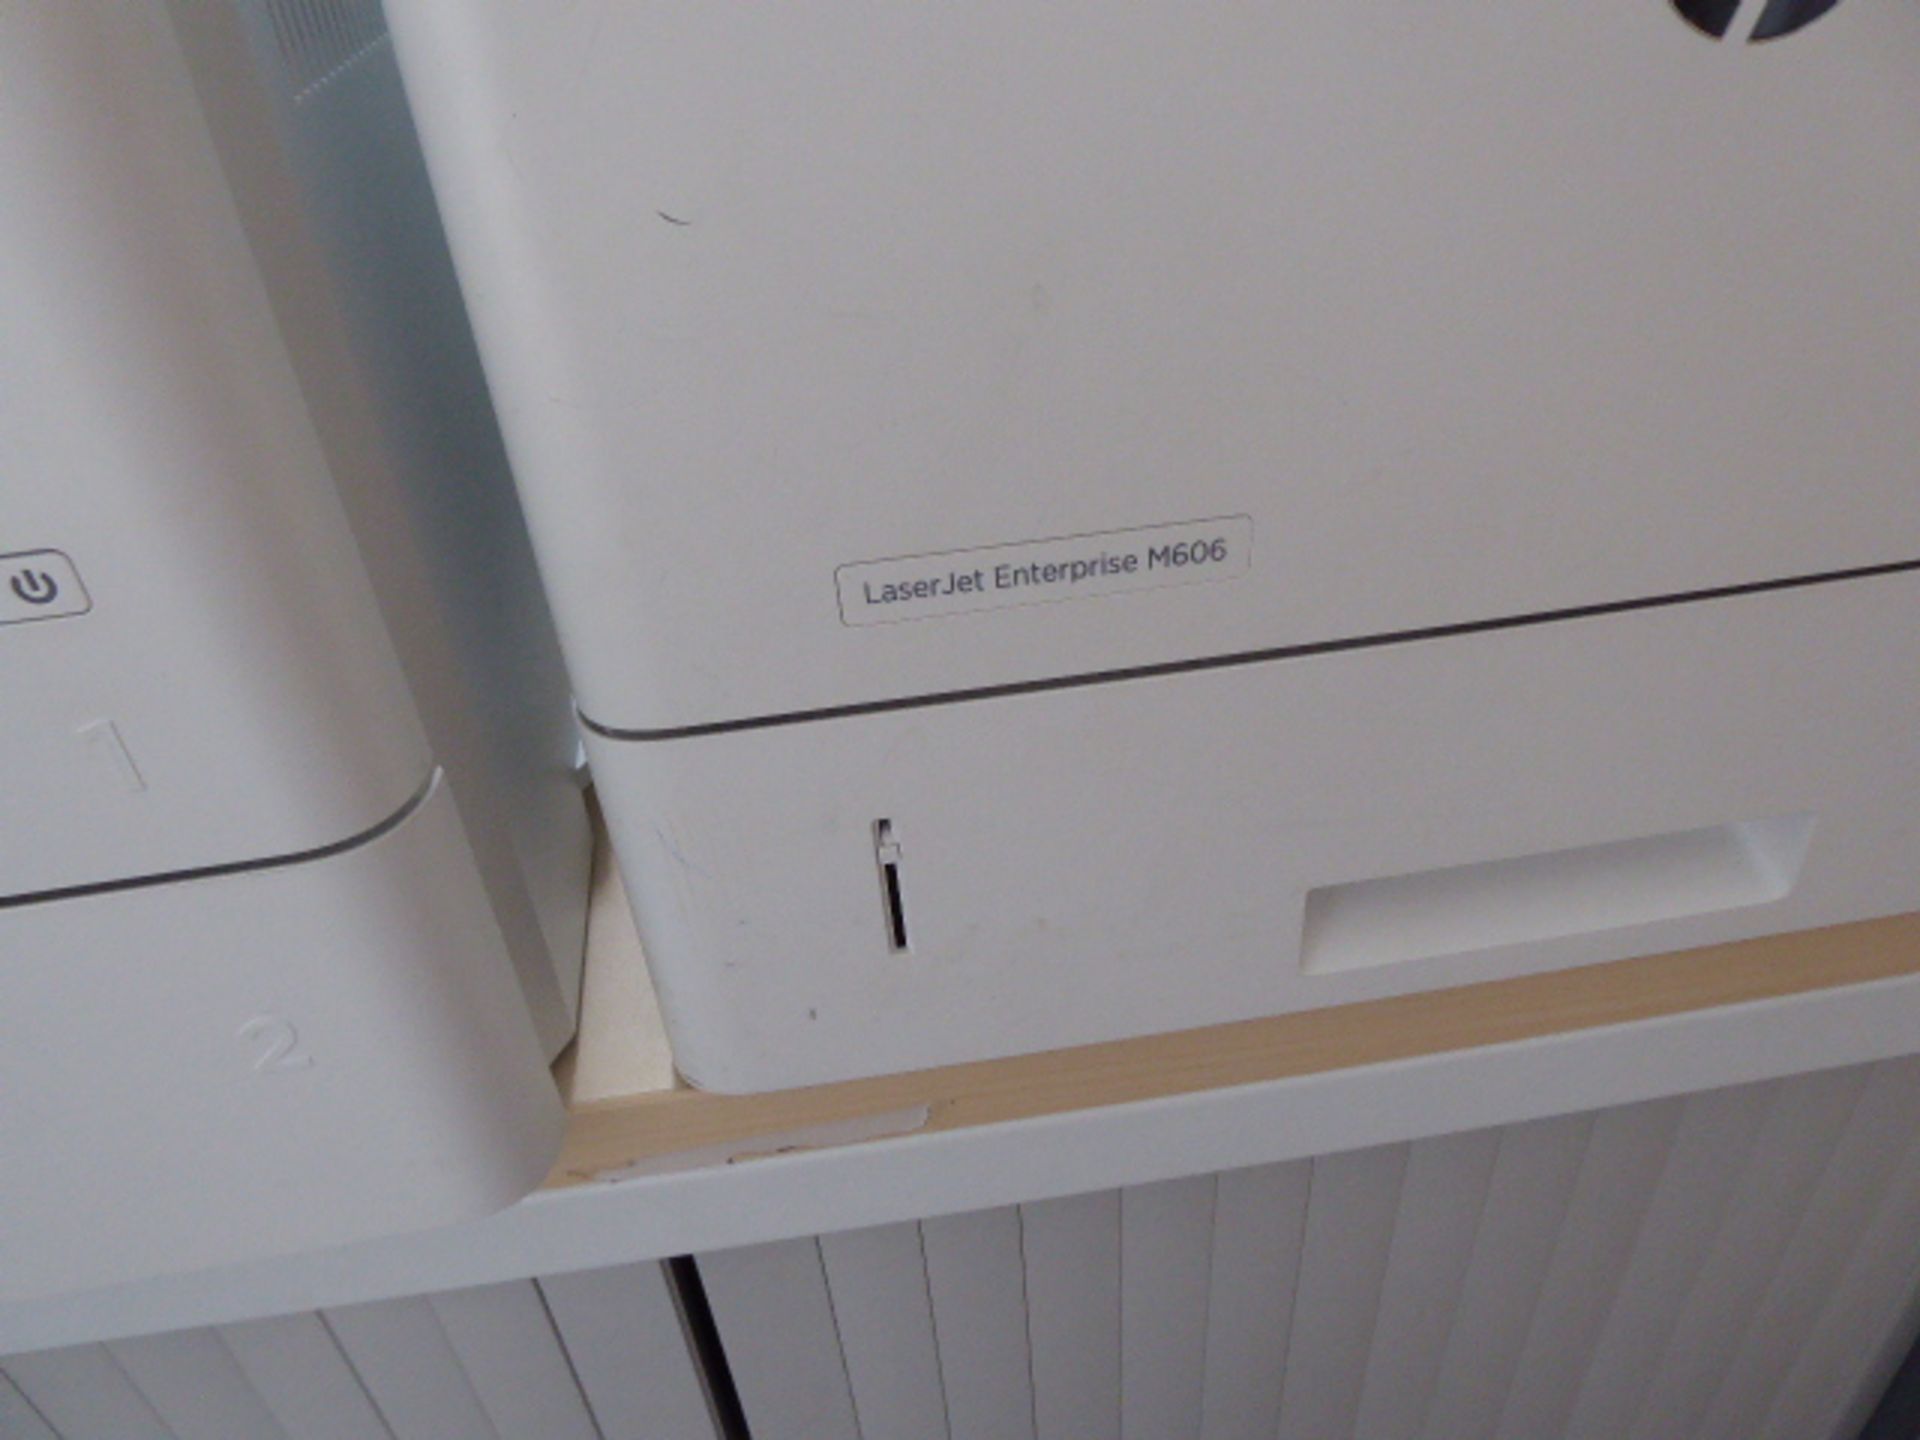 2 HP LaserJet Enterprise M606 printers - Image 2 of 2